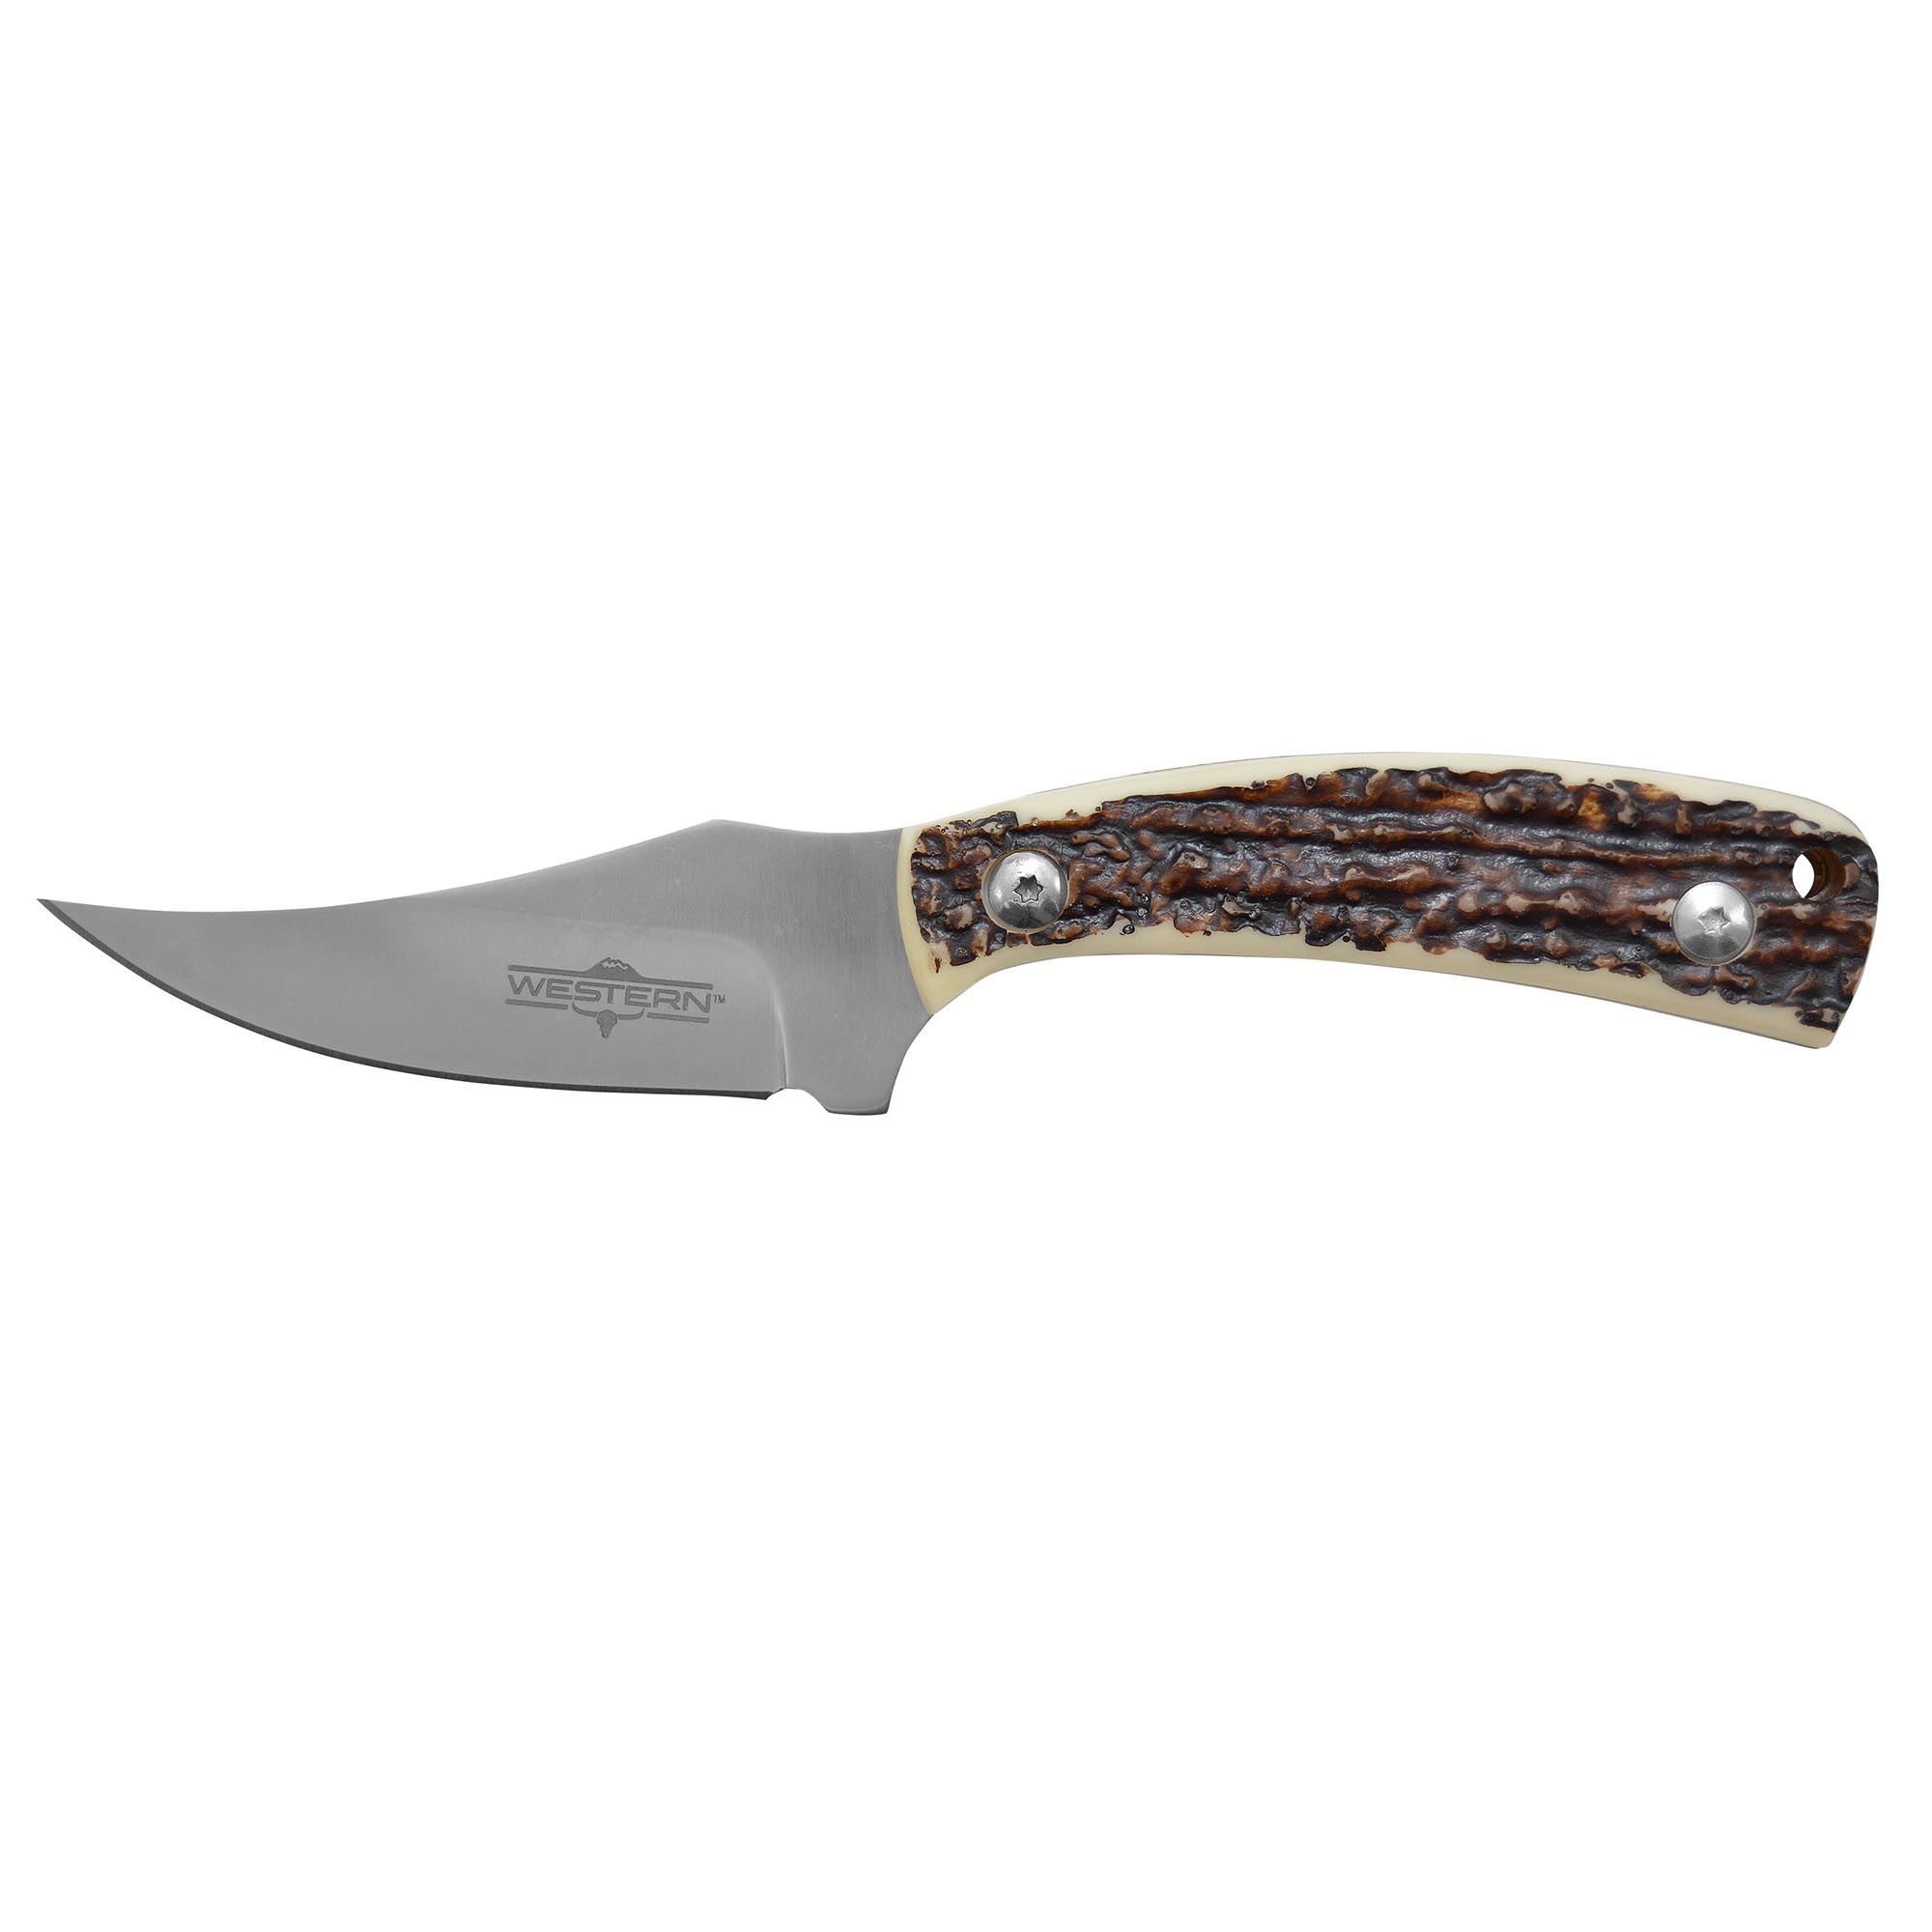 Camillus 9.75 Fixed Blade Pocket Knife, Titanium Stainless Steel